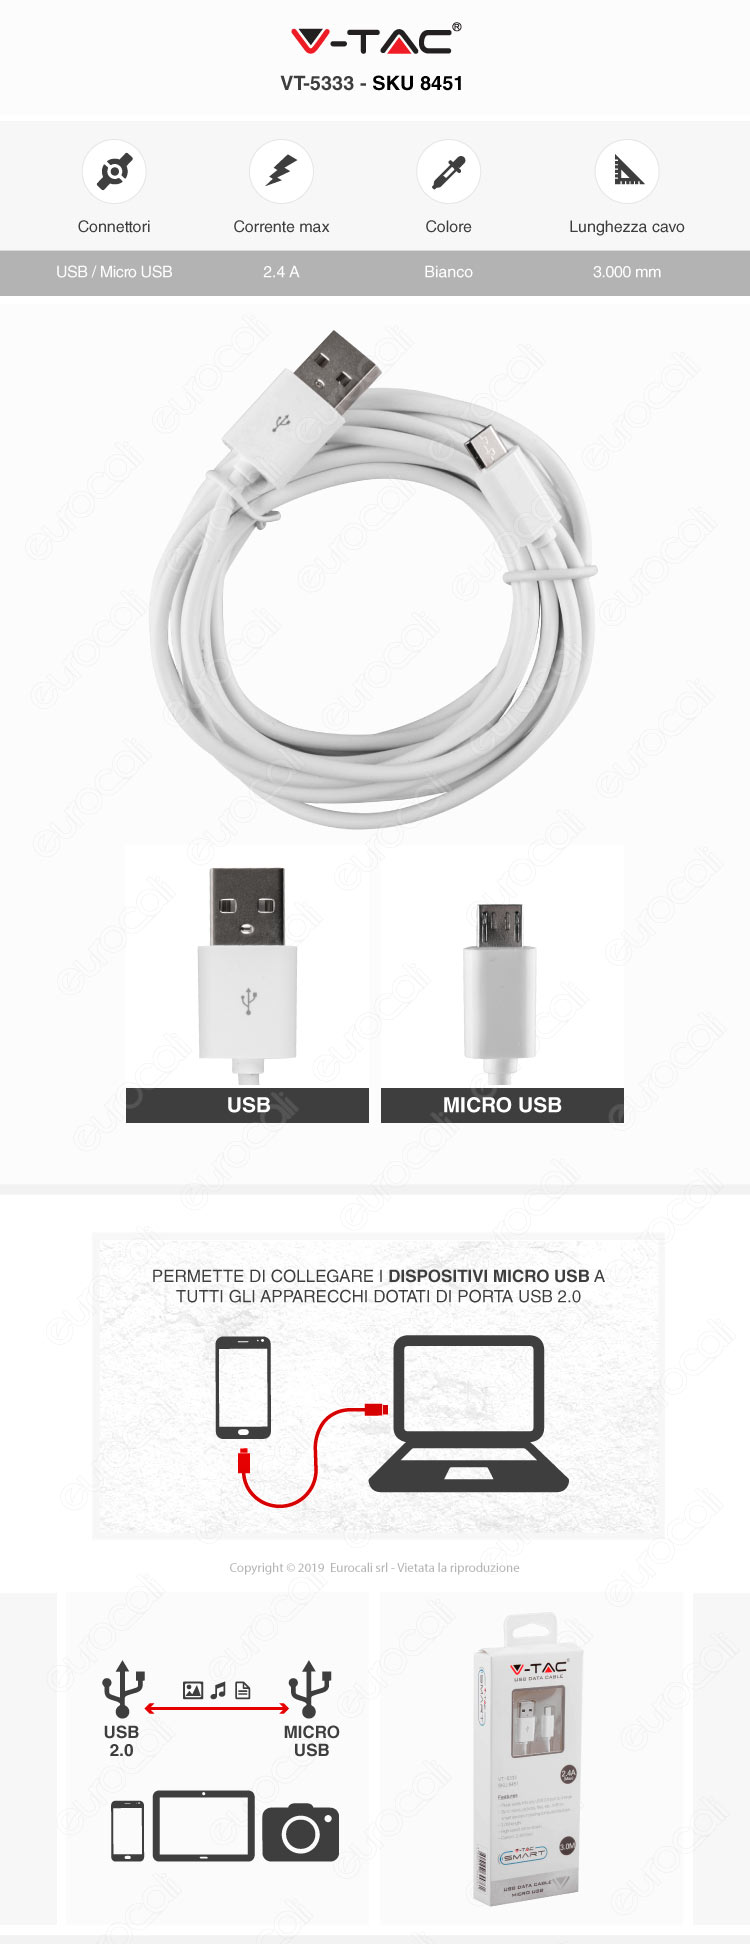 V-Tac VT-5333 USB Data Cable Micro USB Cavo Colore Bianco 3m 